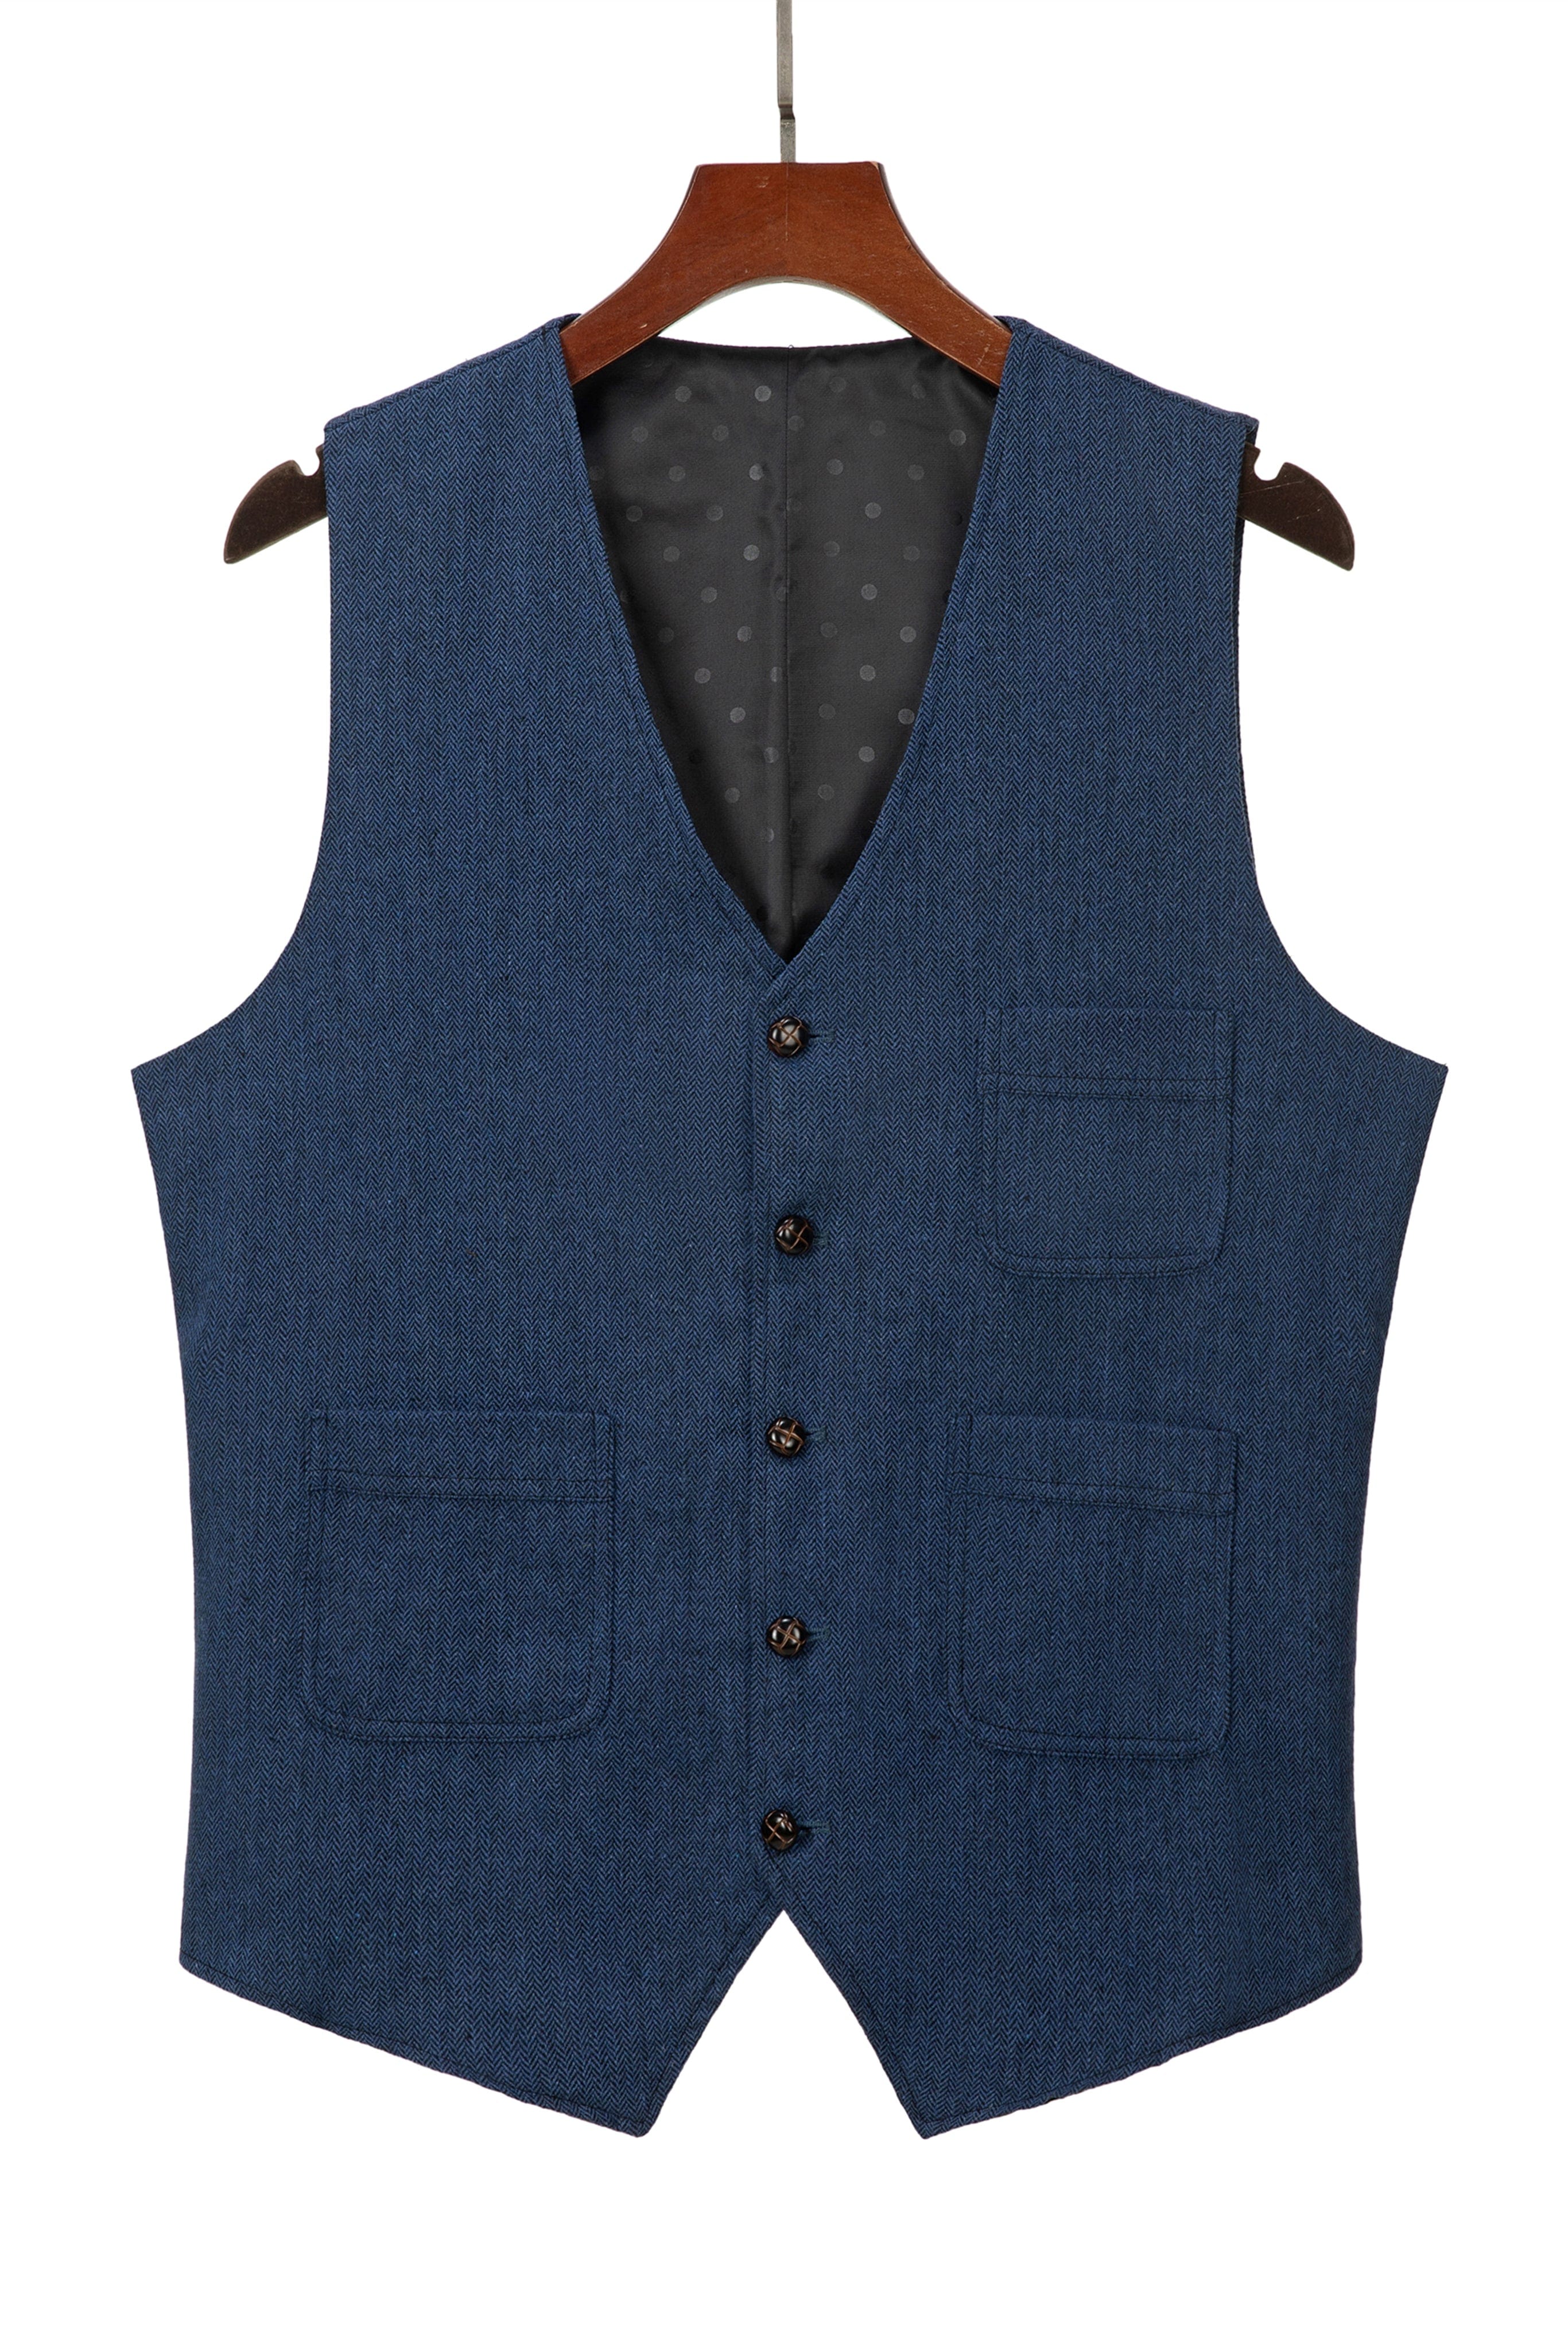 aesido Men's Formal Suit Vest Herringbone V Neck Waistcoat